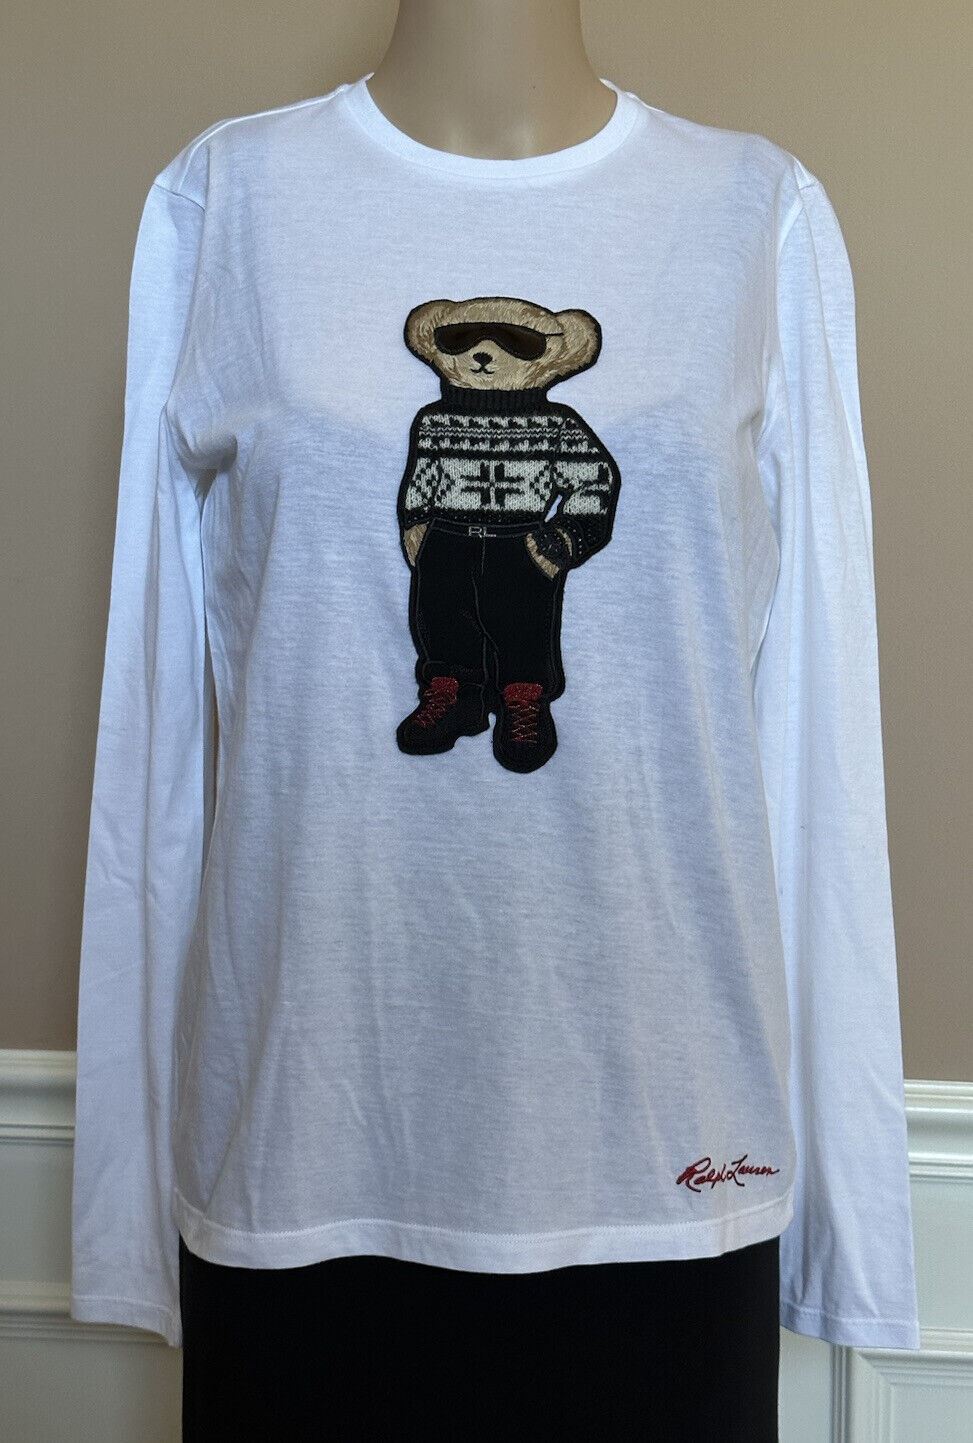 Neu mit Etikett: 450 $ Polo Ralph Lauren Purple Label Bear Weißes Langarm-T-Shirt S IT